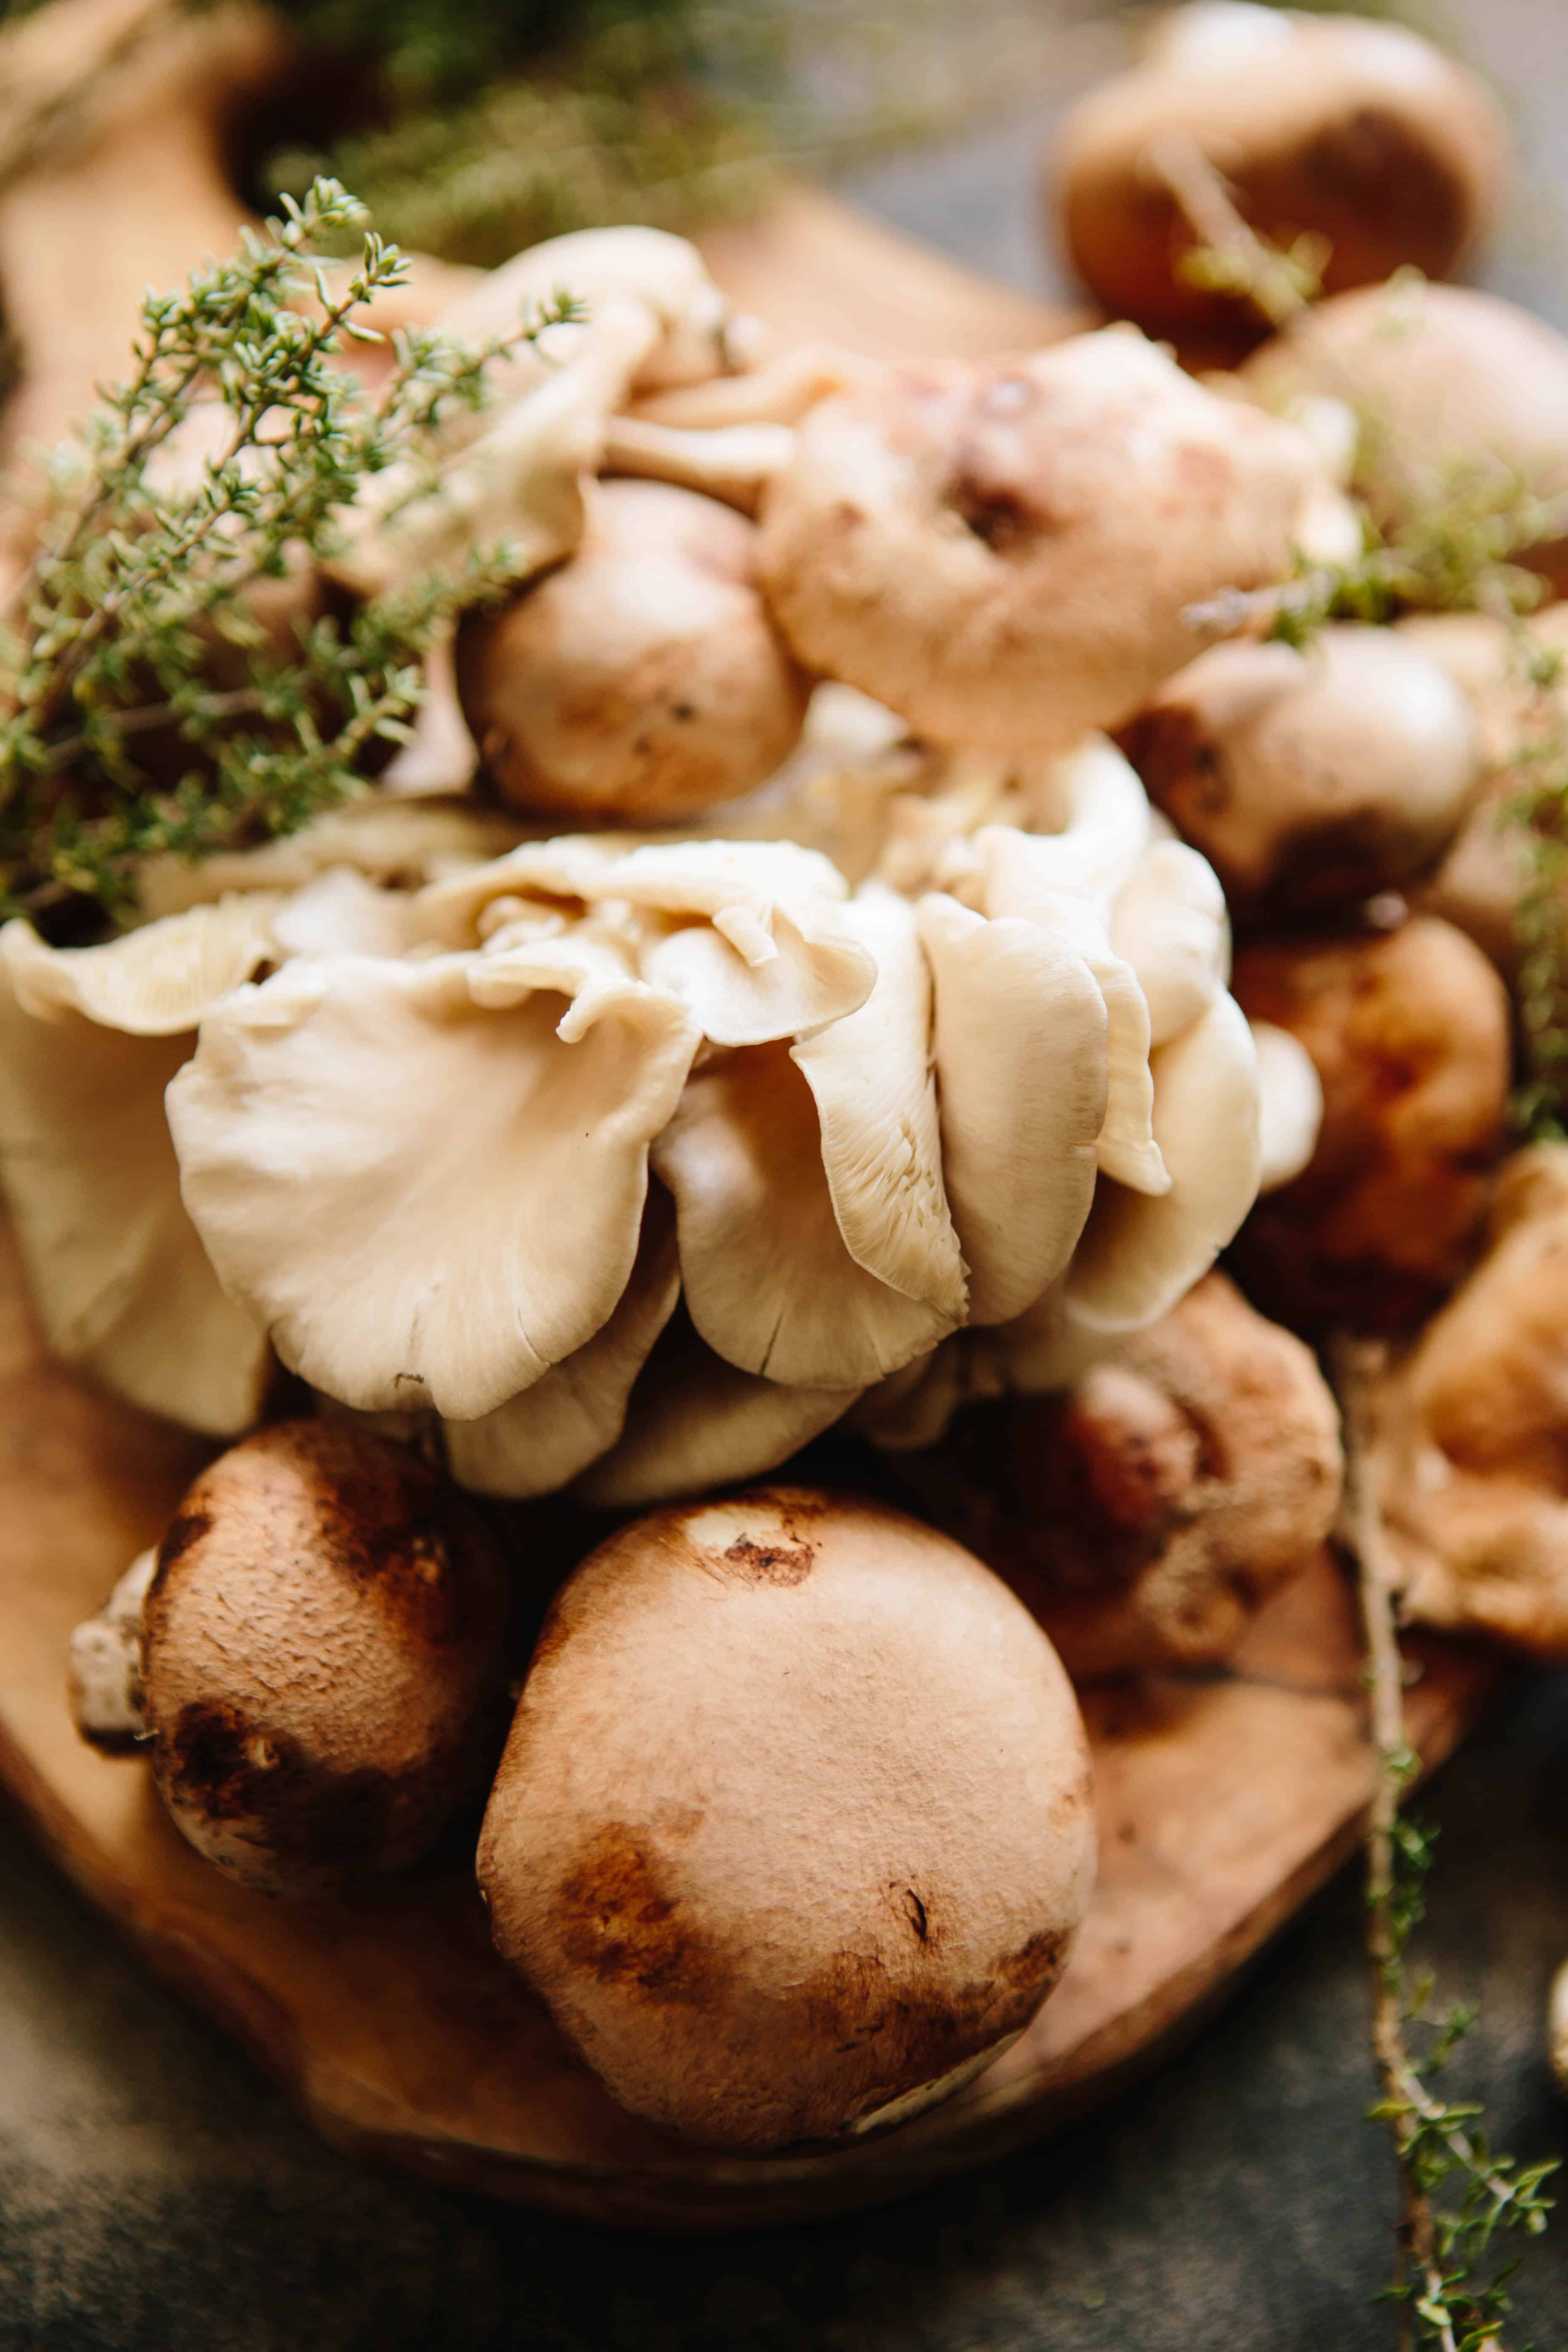 A close up shot of several raw mushroom varieties.